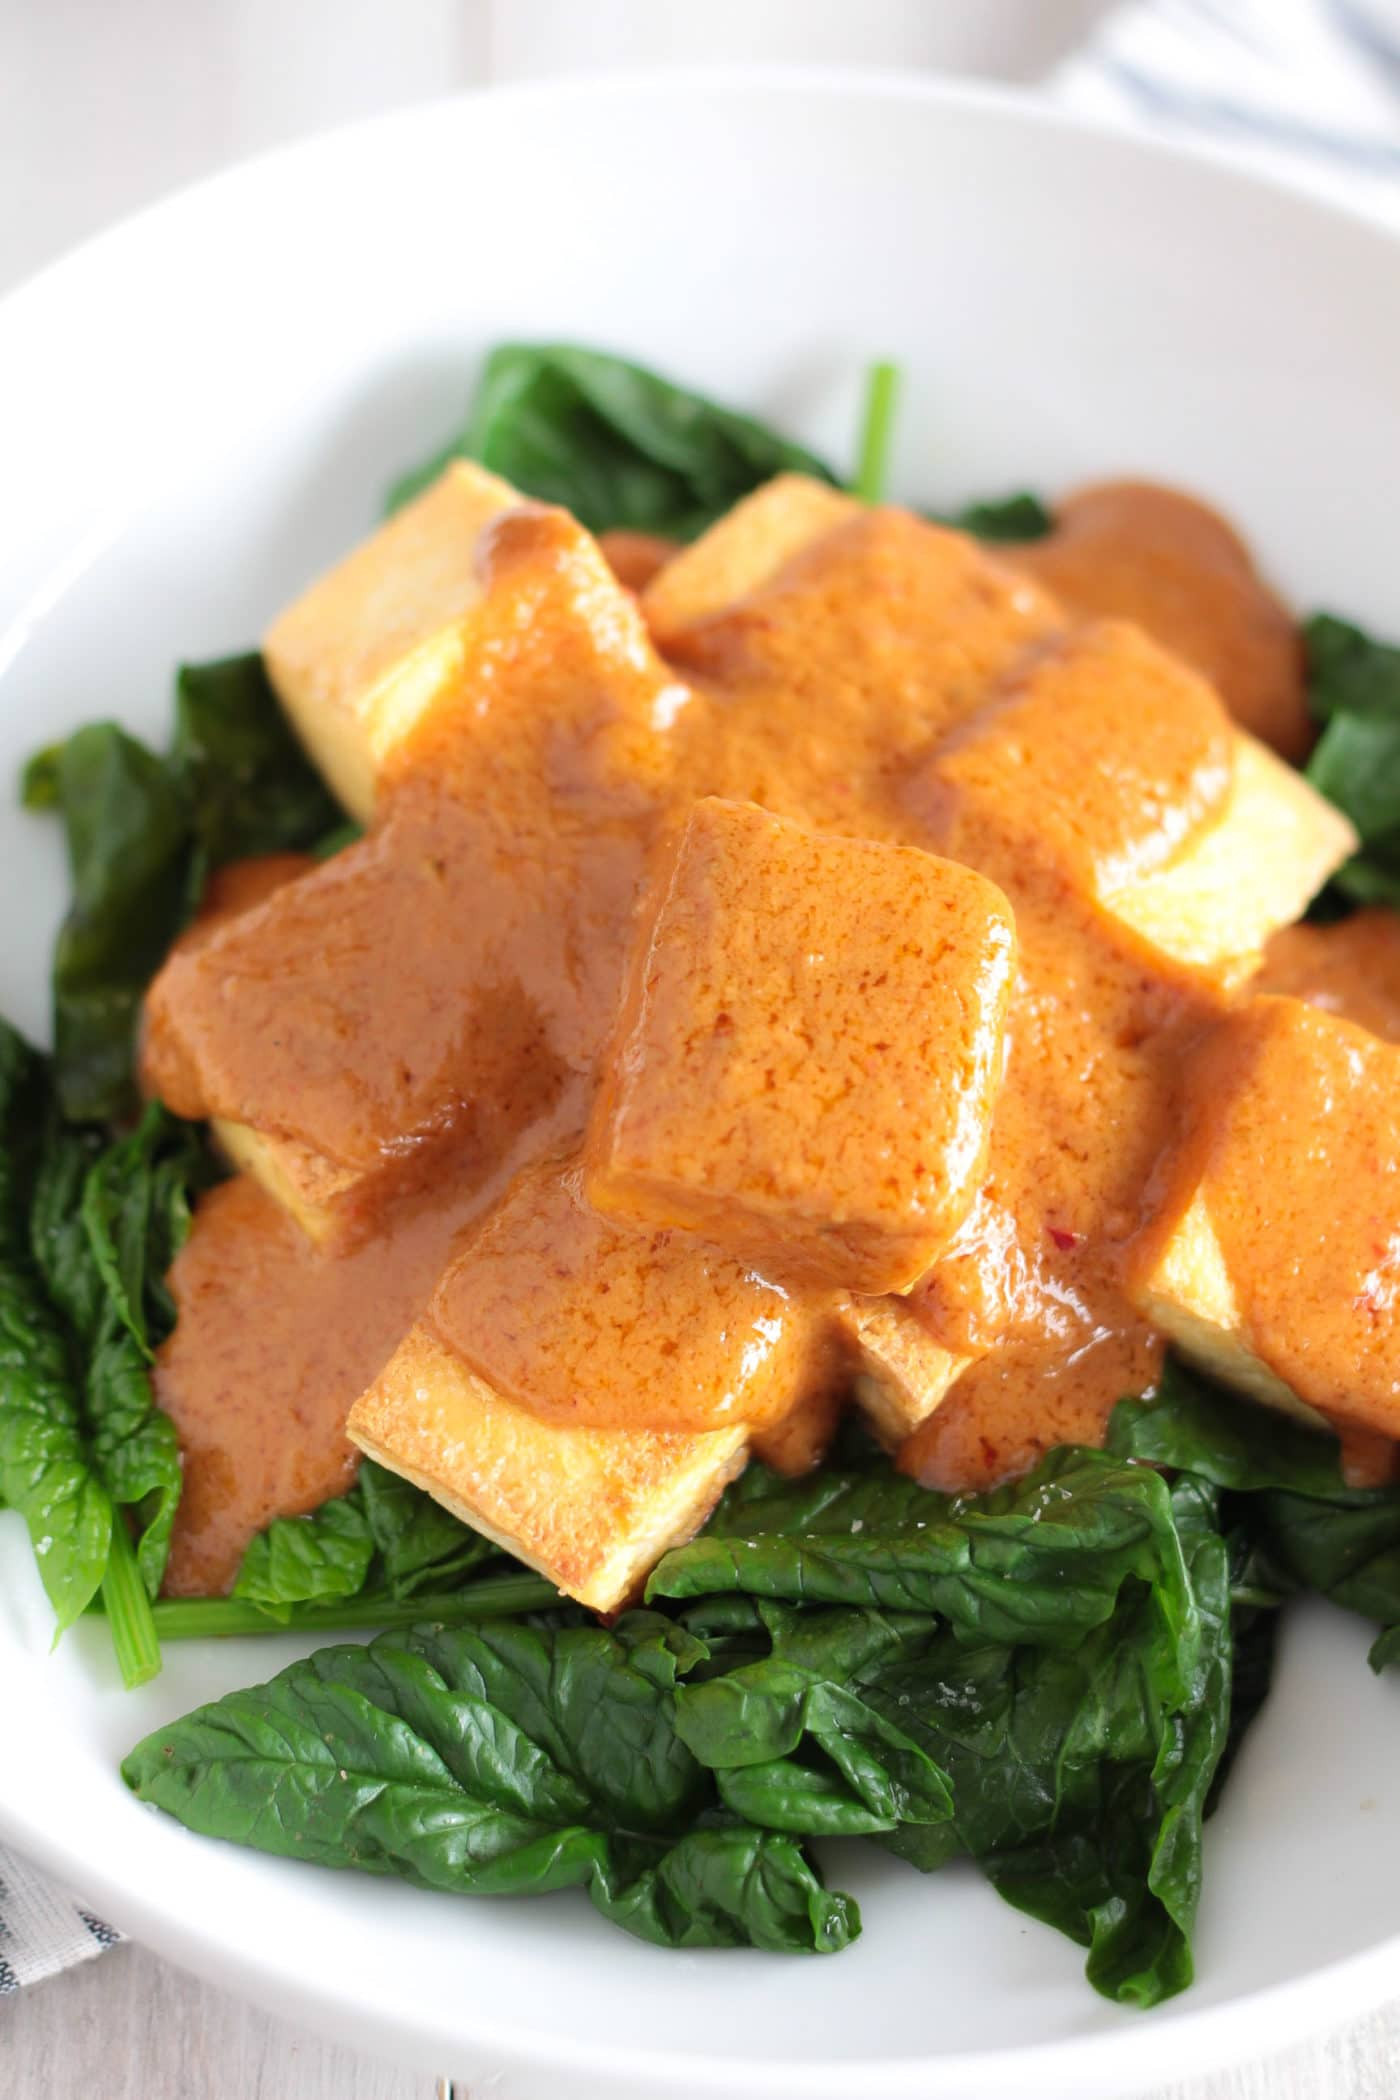 Recipes Using Tofu
 Vegan Thai Tofu with Peanut Sauce Low Carb Easy Le